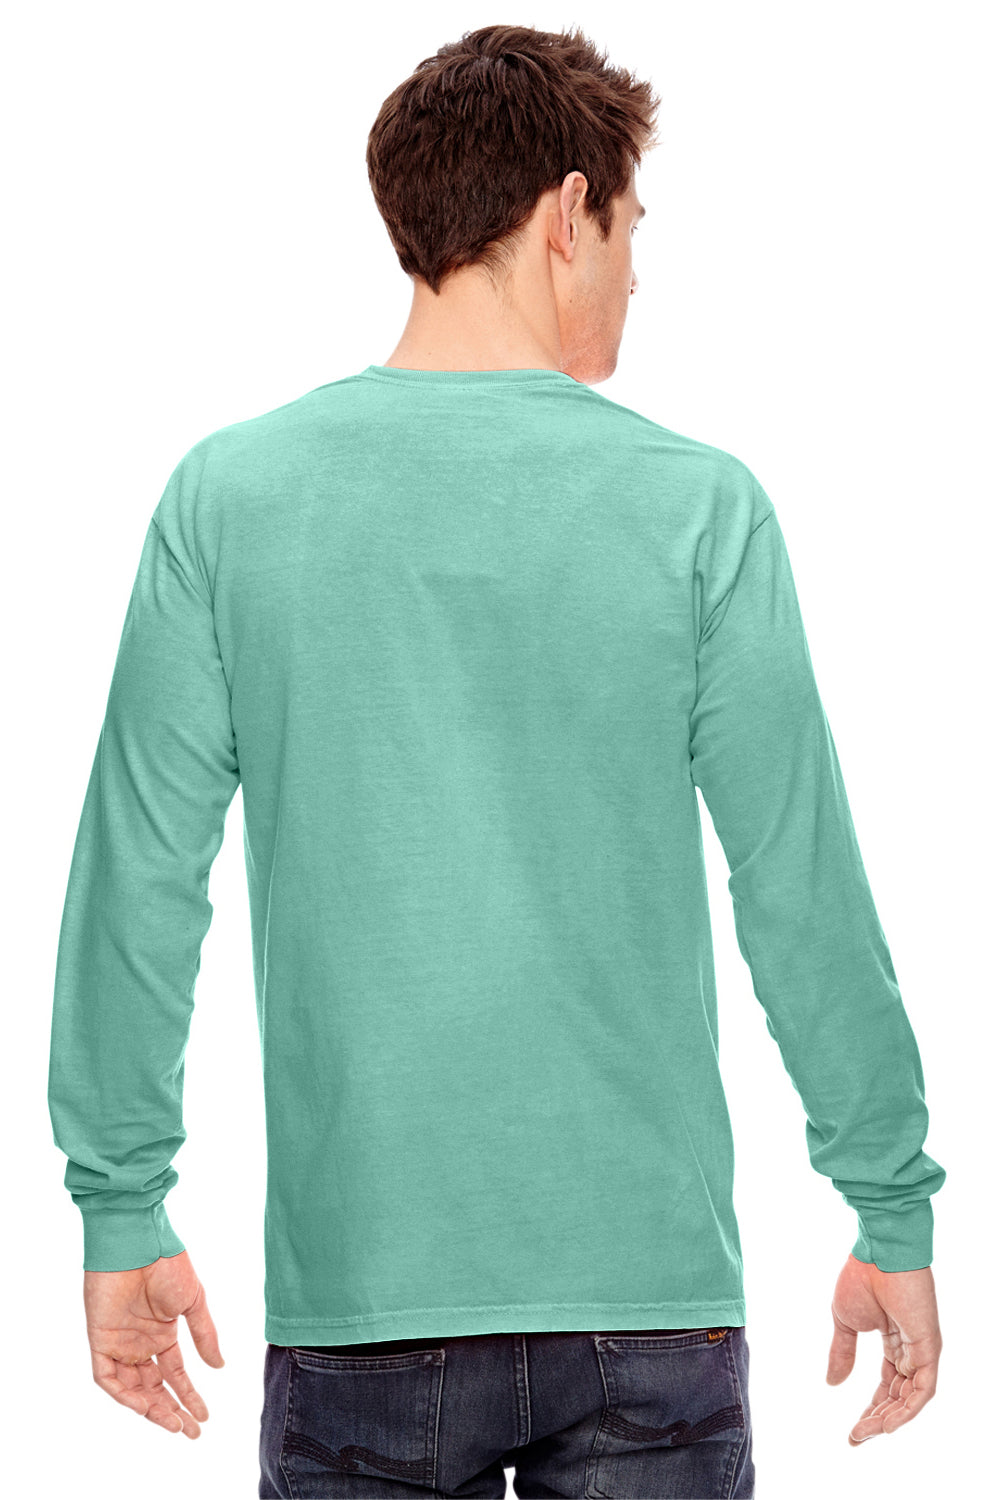 Comfort Colors C6014 Mens Long Sleeve Crewneck T-Shirt Island Reef Green Back